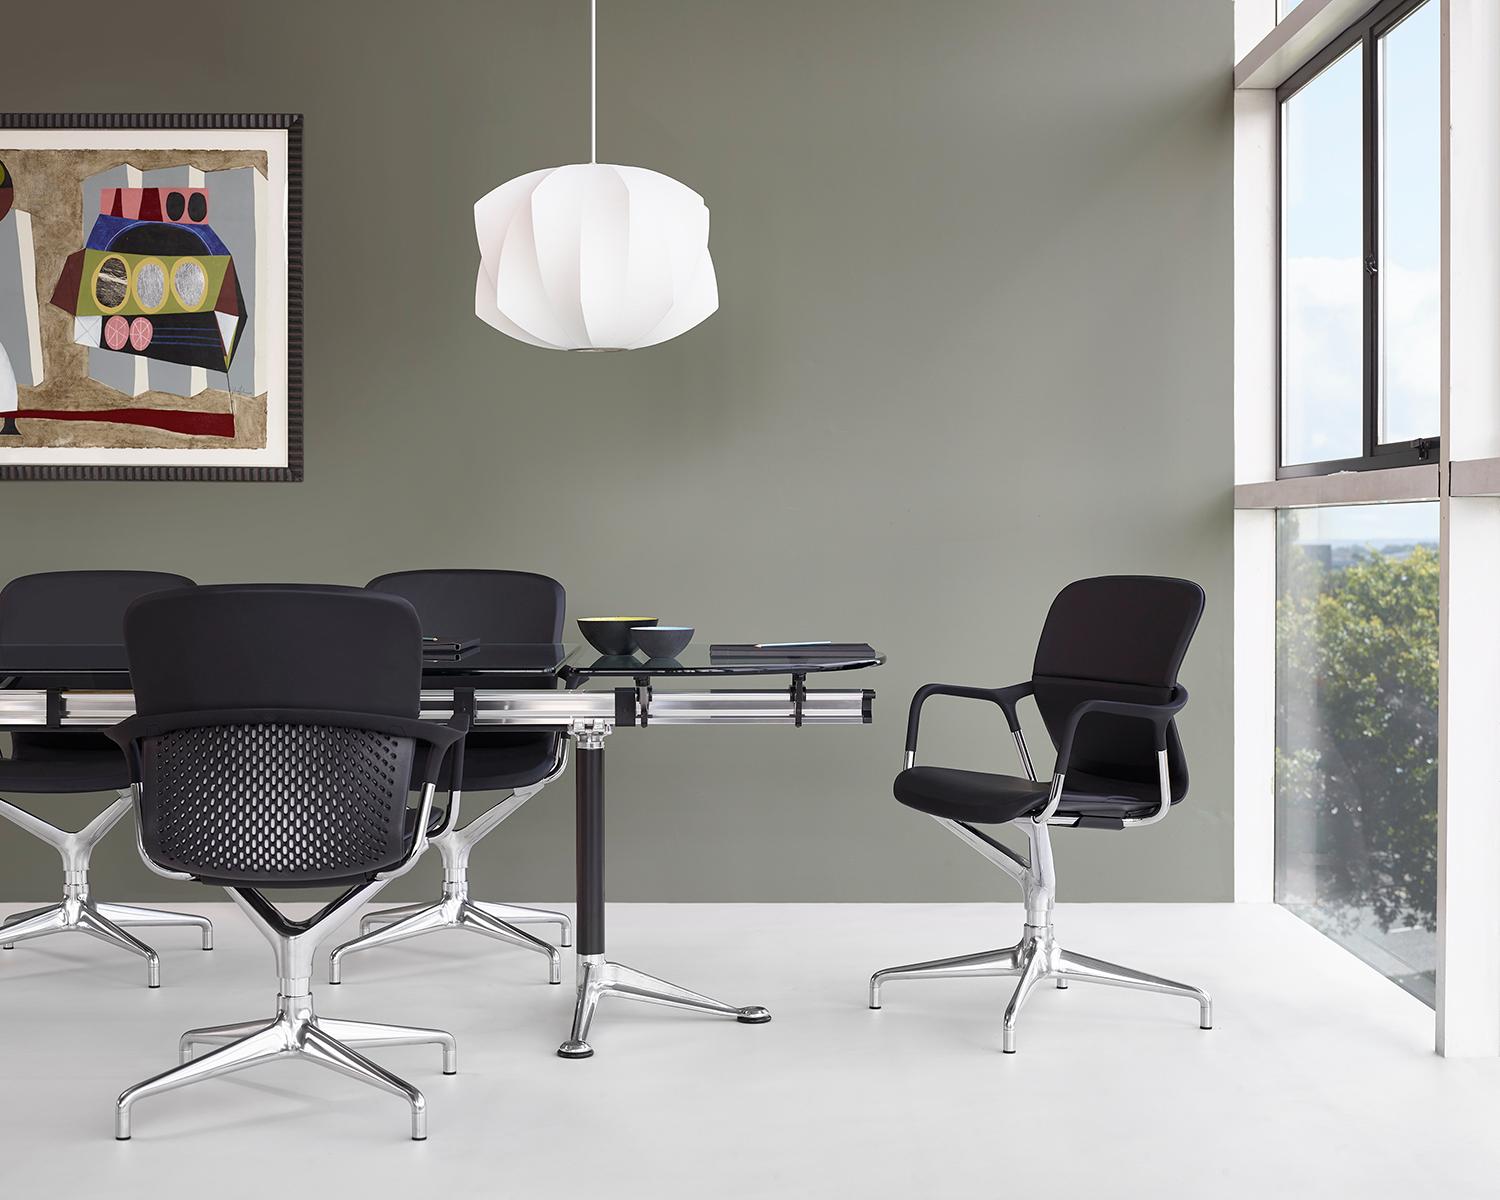 Responsive Meeting Chair From Herman Miller @ Europa Design